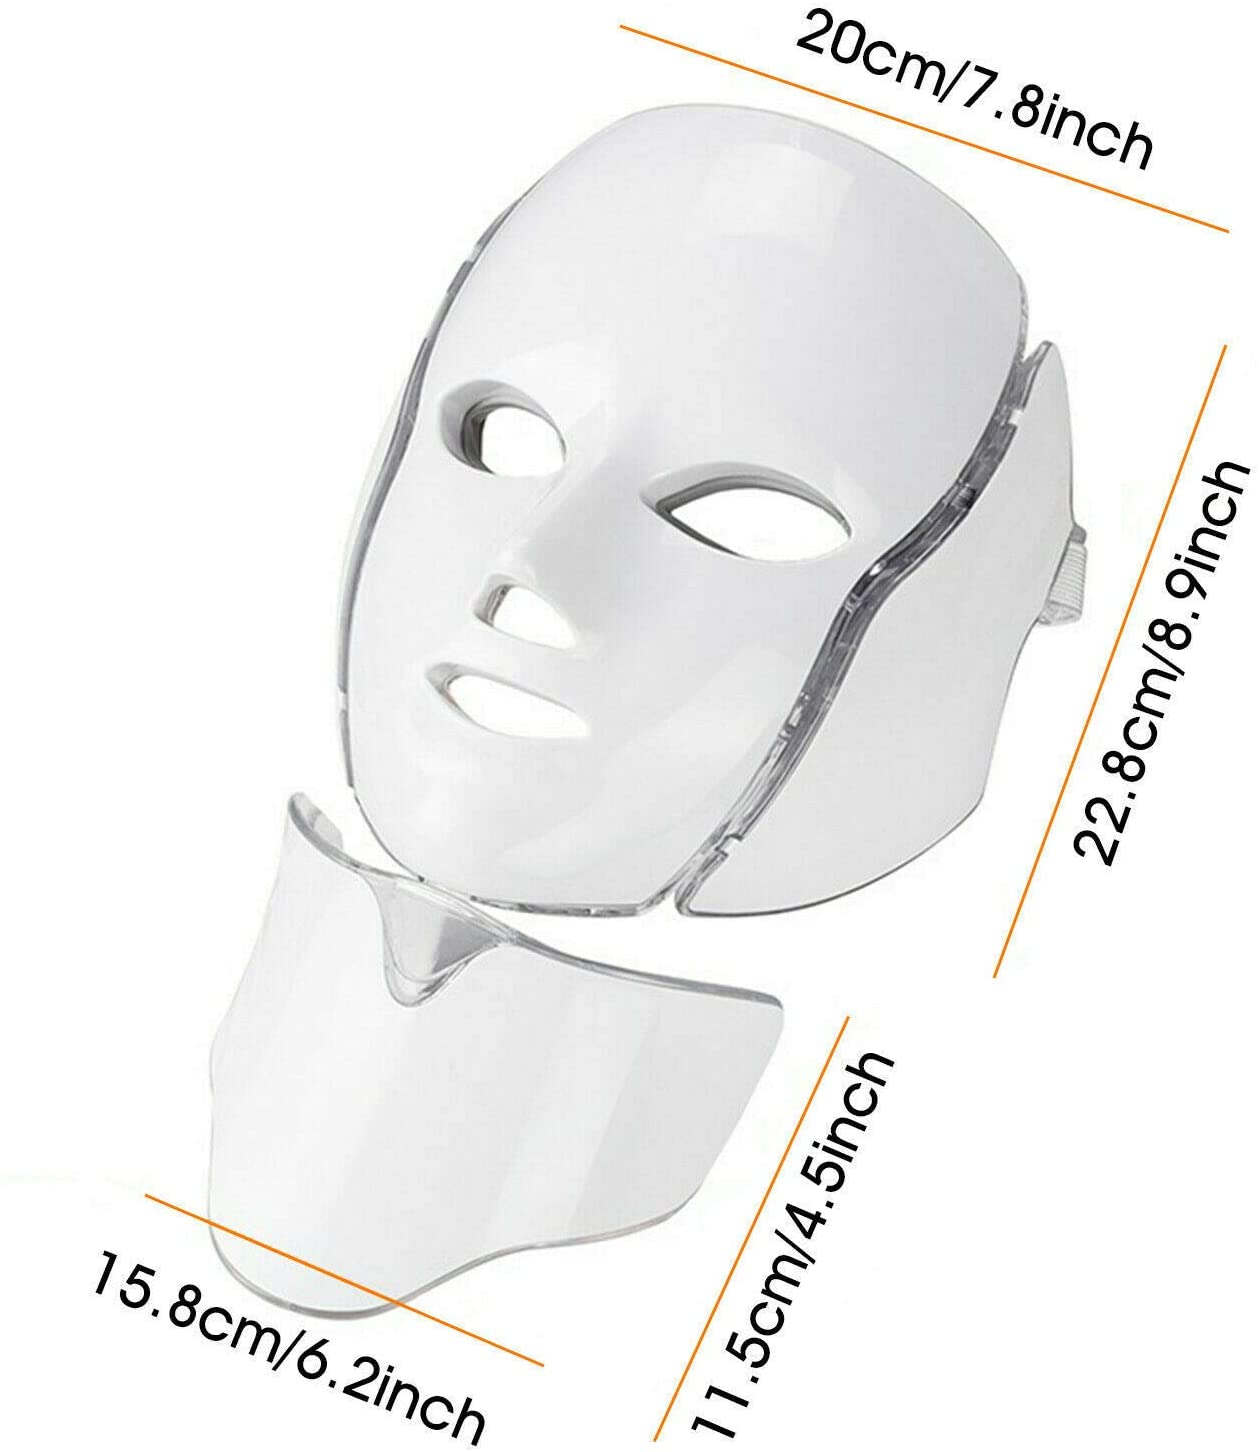 LED Light Photon Face Mask Neck Rejuvenation Skin Facial Wrinkle Therapy 7+1